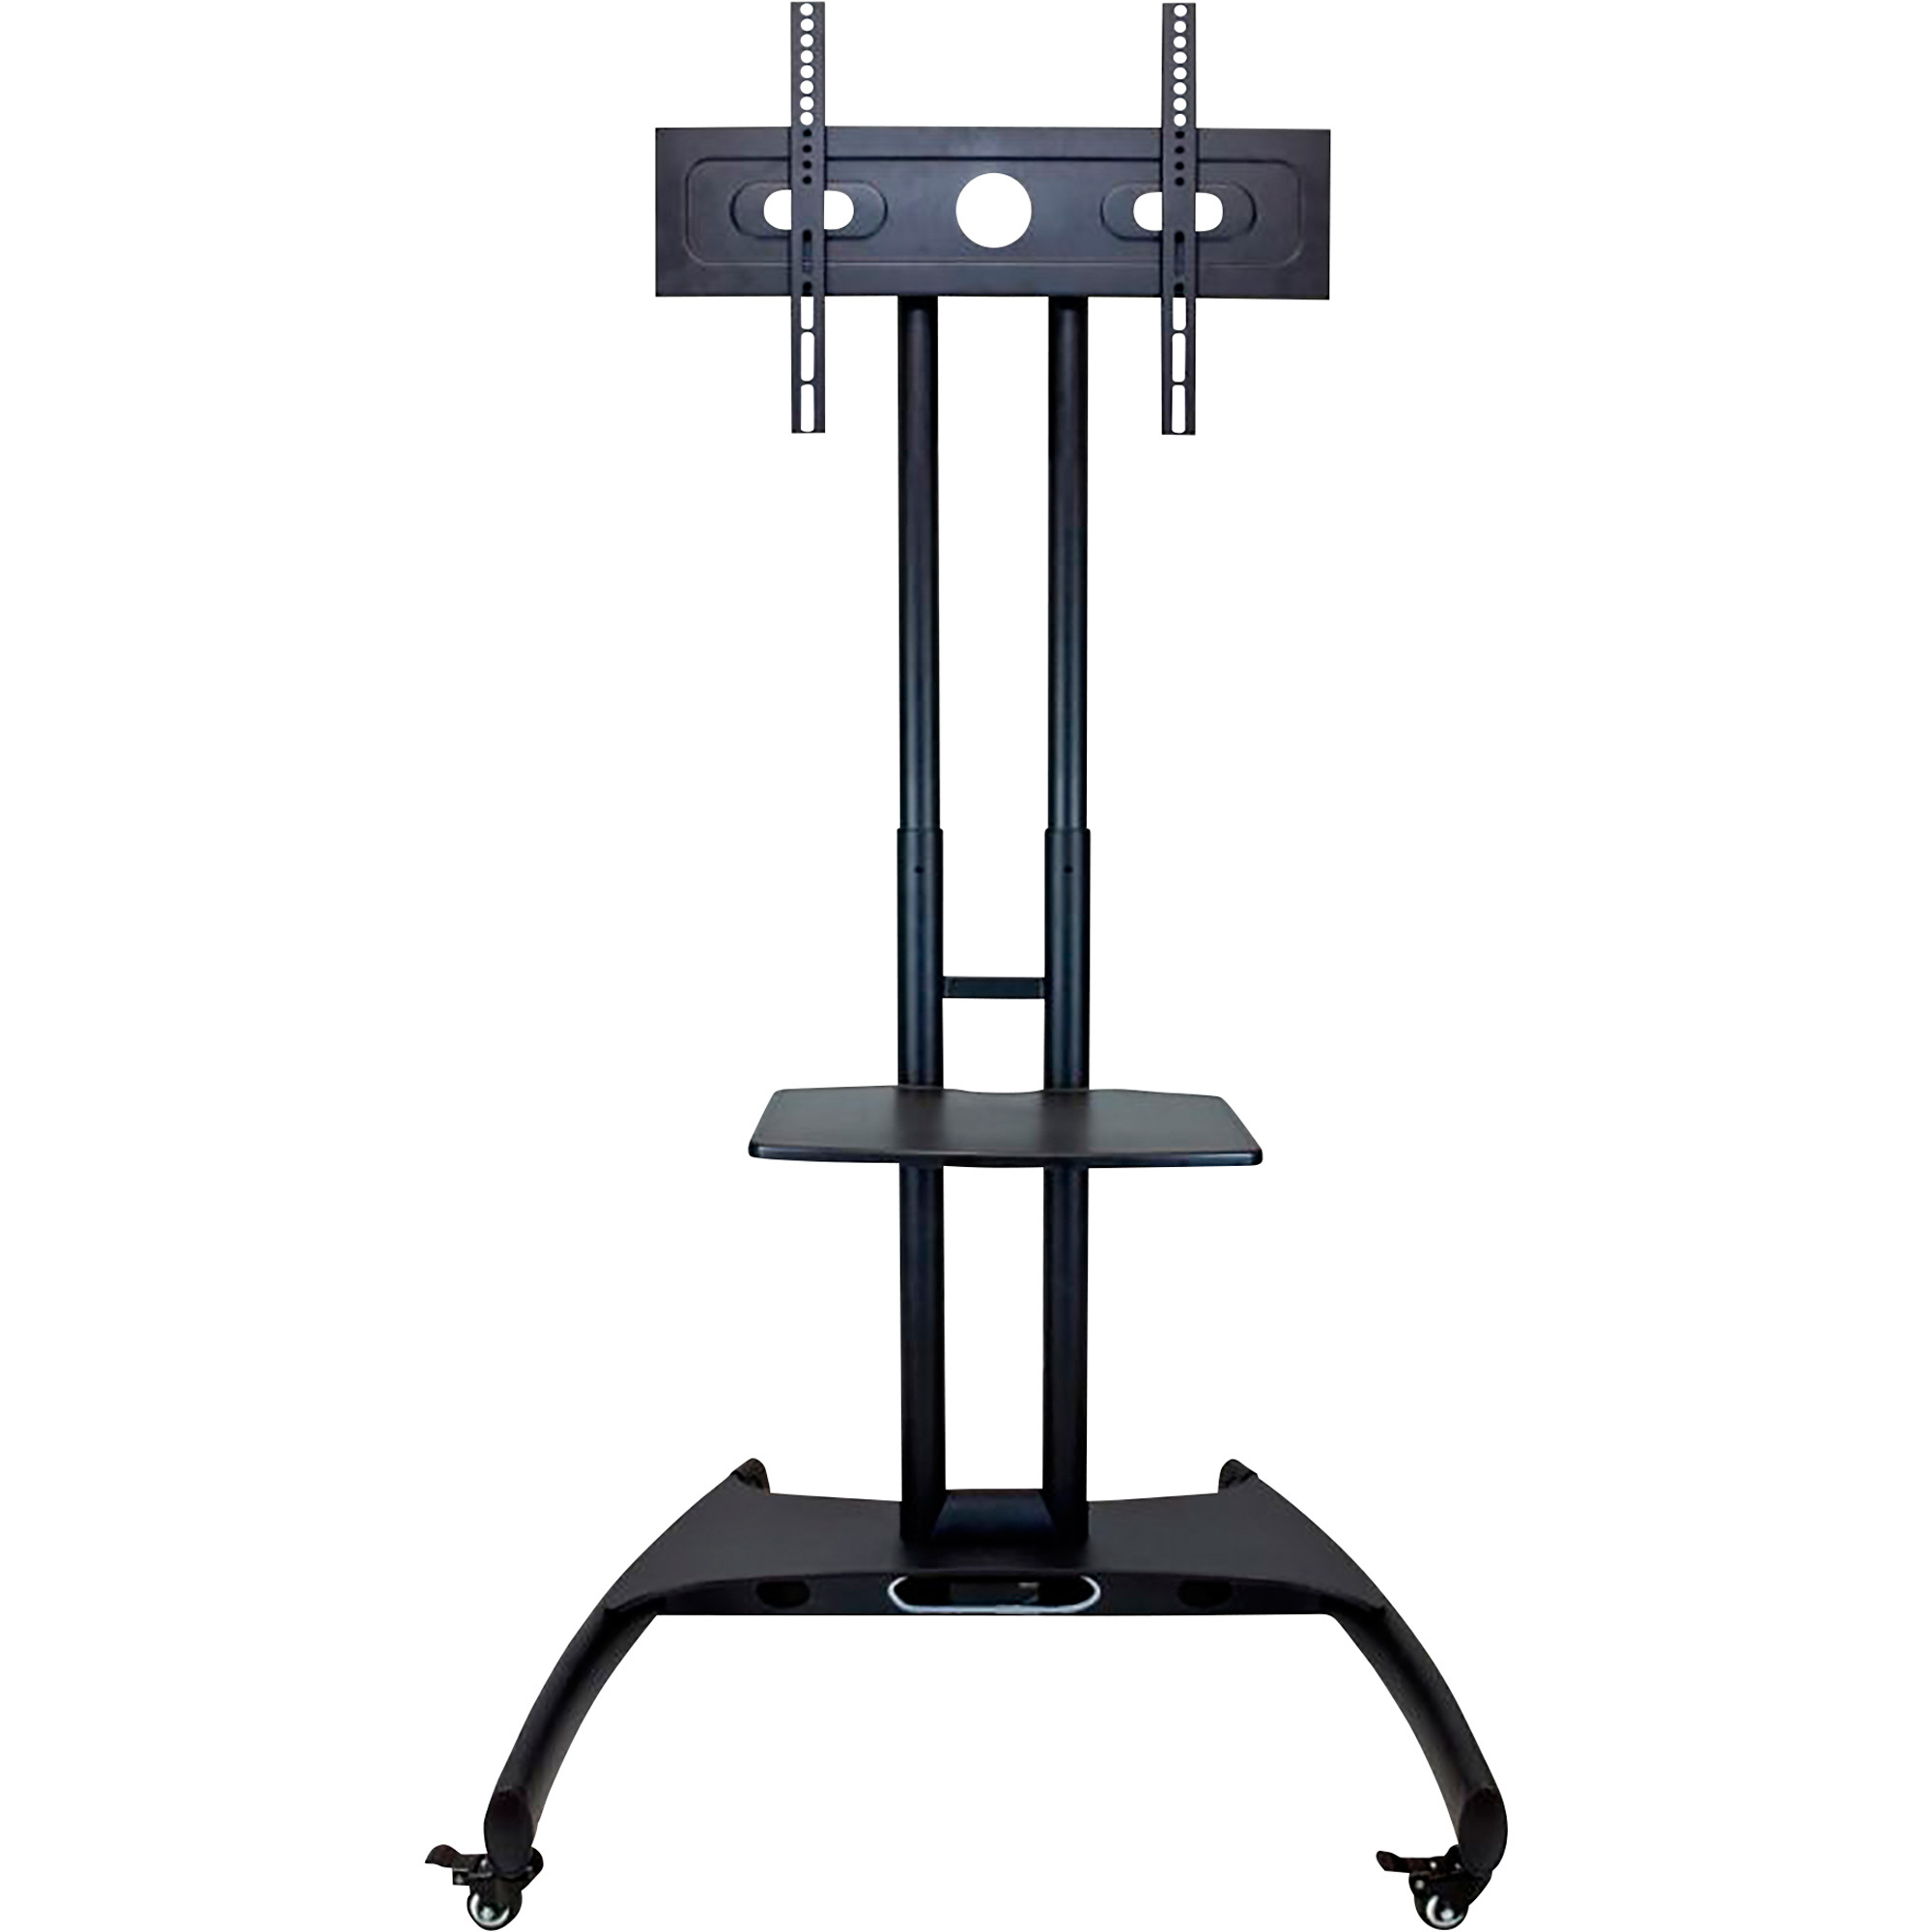 Adjustable TV Stand, Model - Luxor FP2500